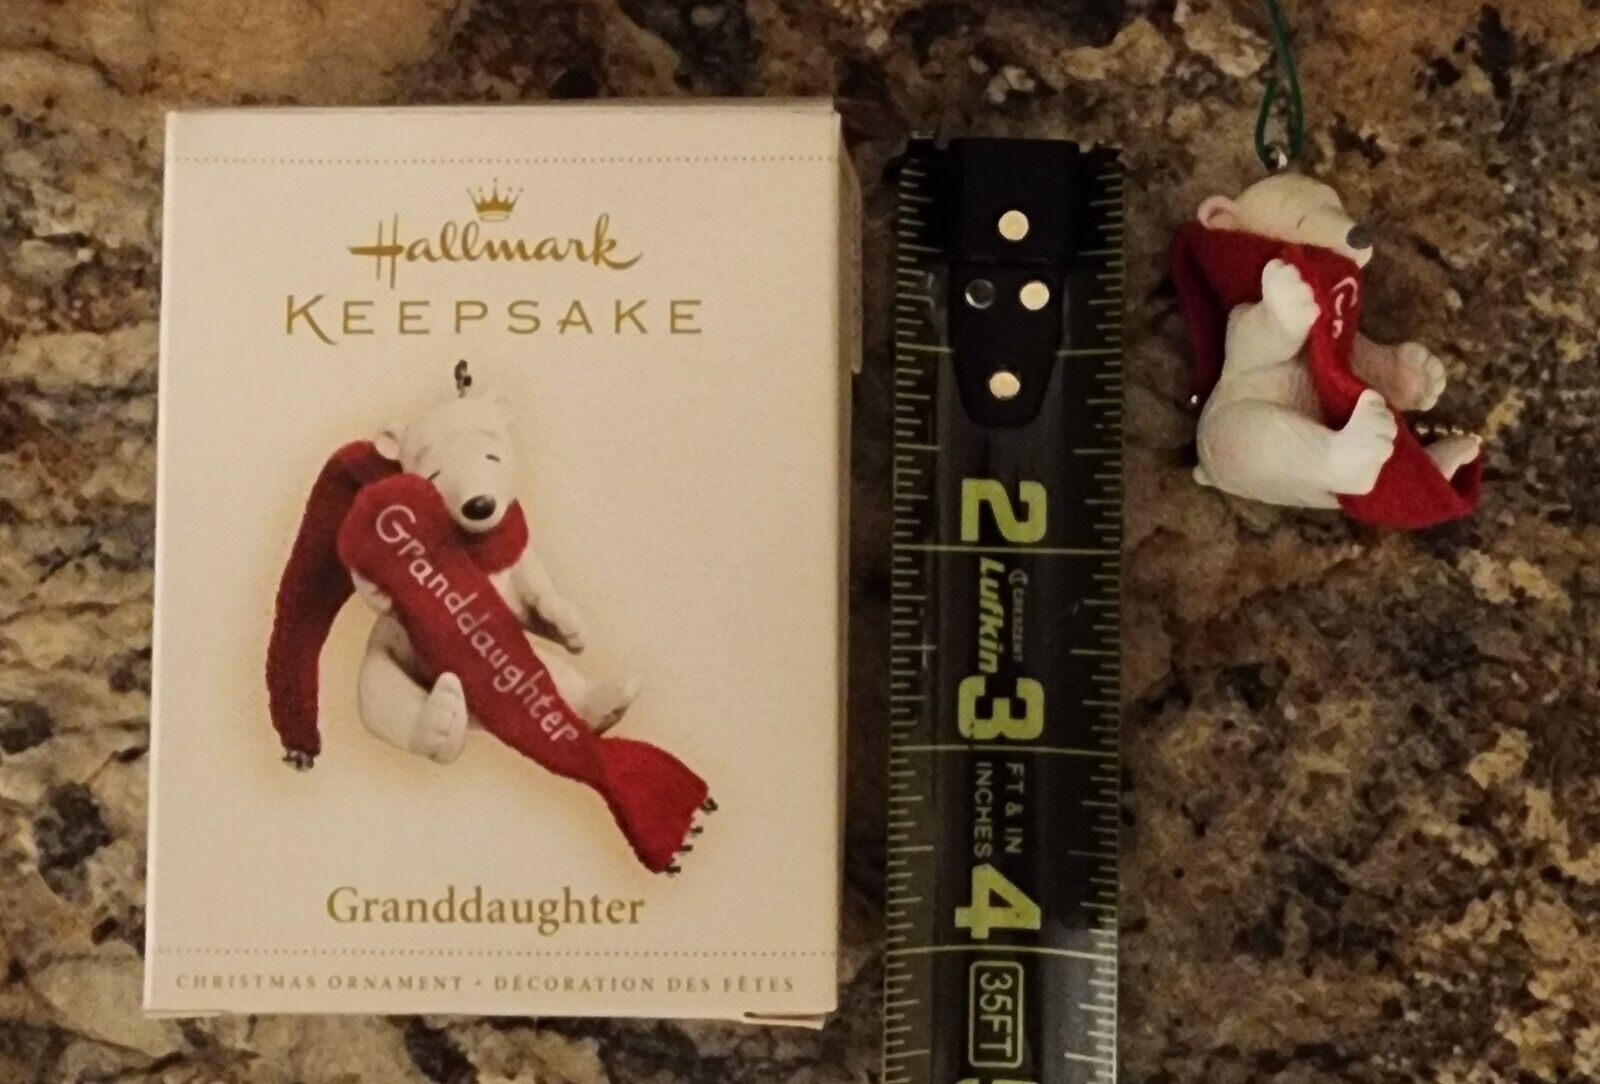 Hallmark Keepsake Collection Ornament Granddaughter 2006 Edition